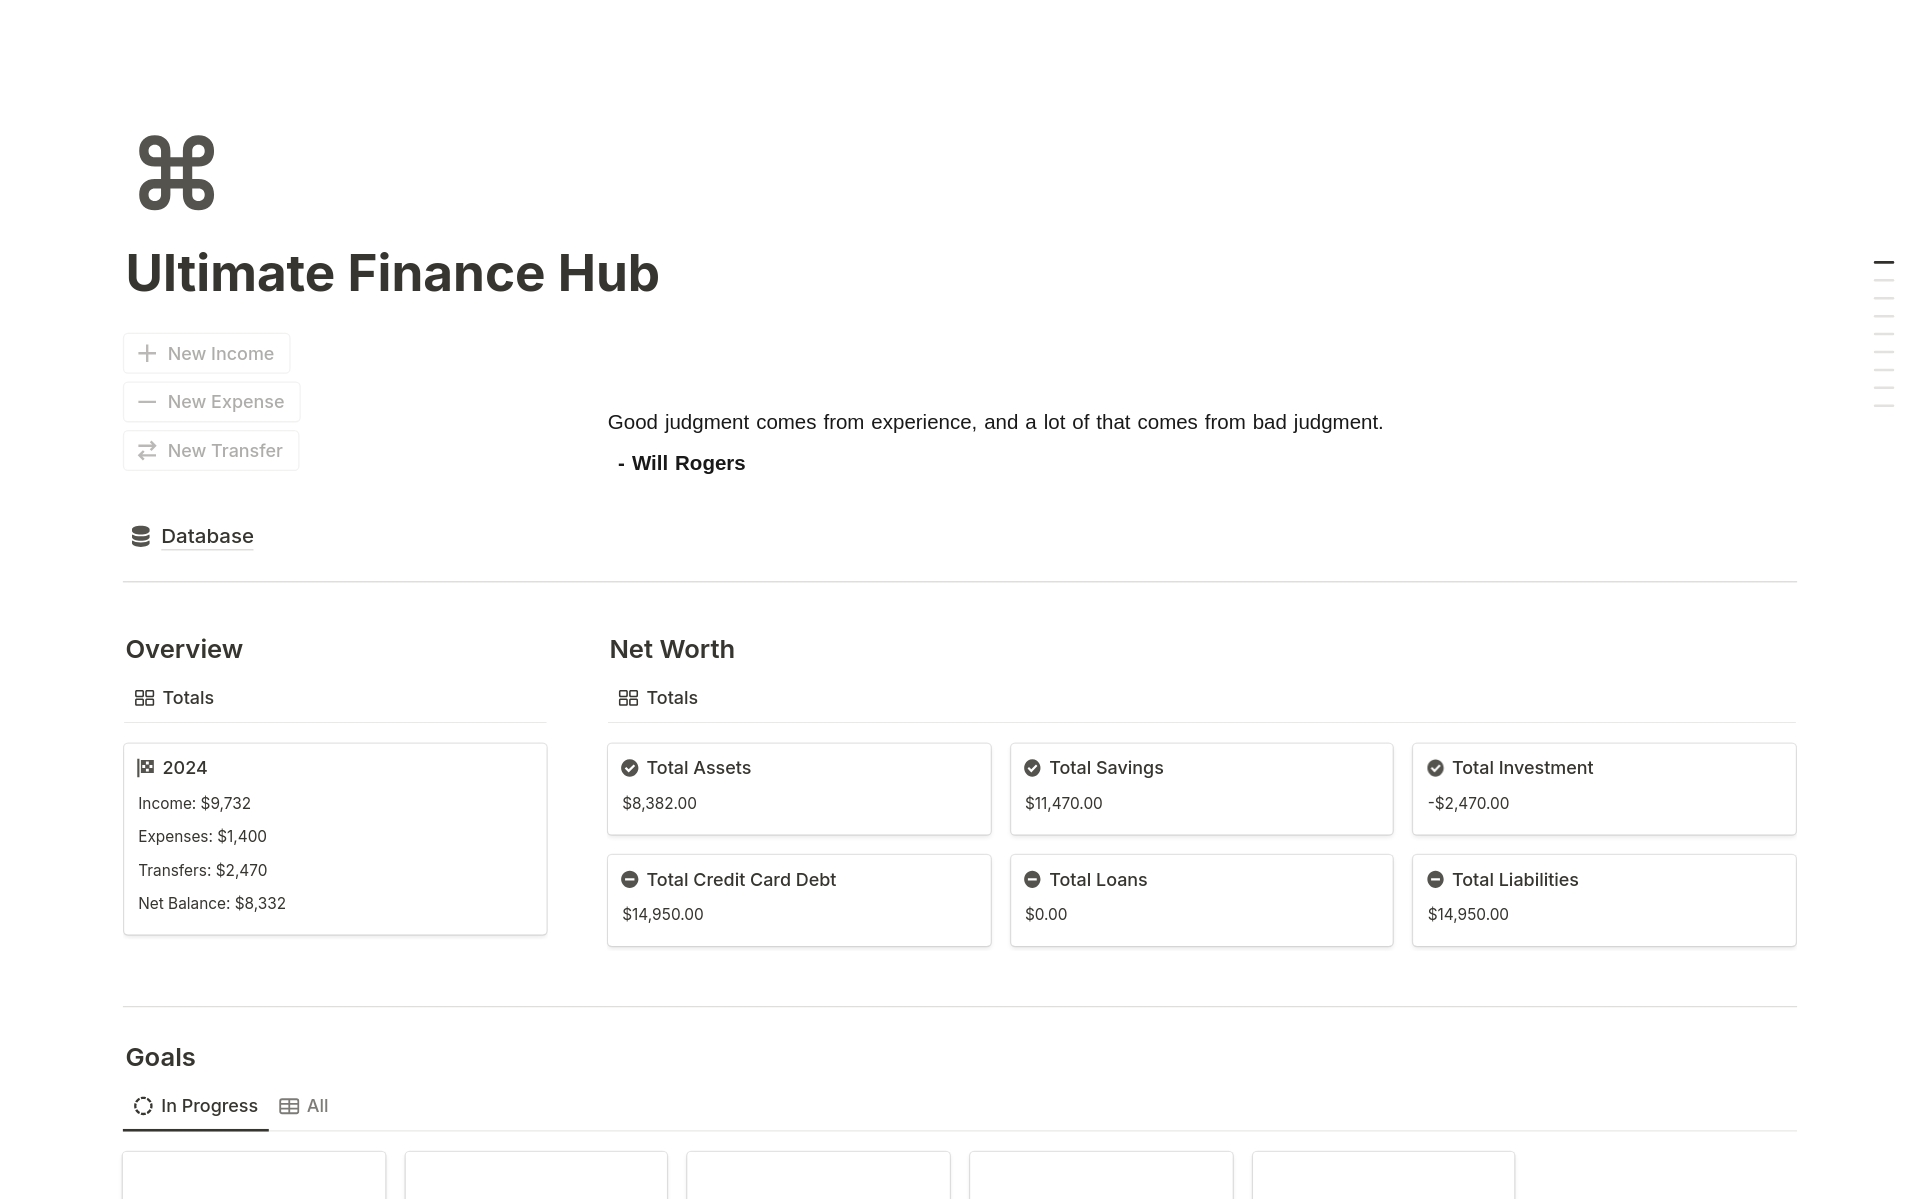 Vista previa de plantilla para Ultimate Finance Hub